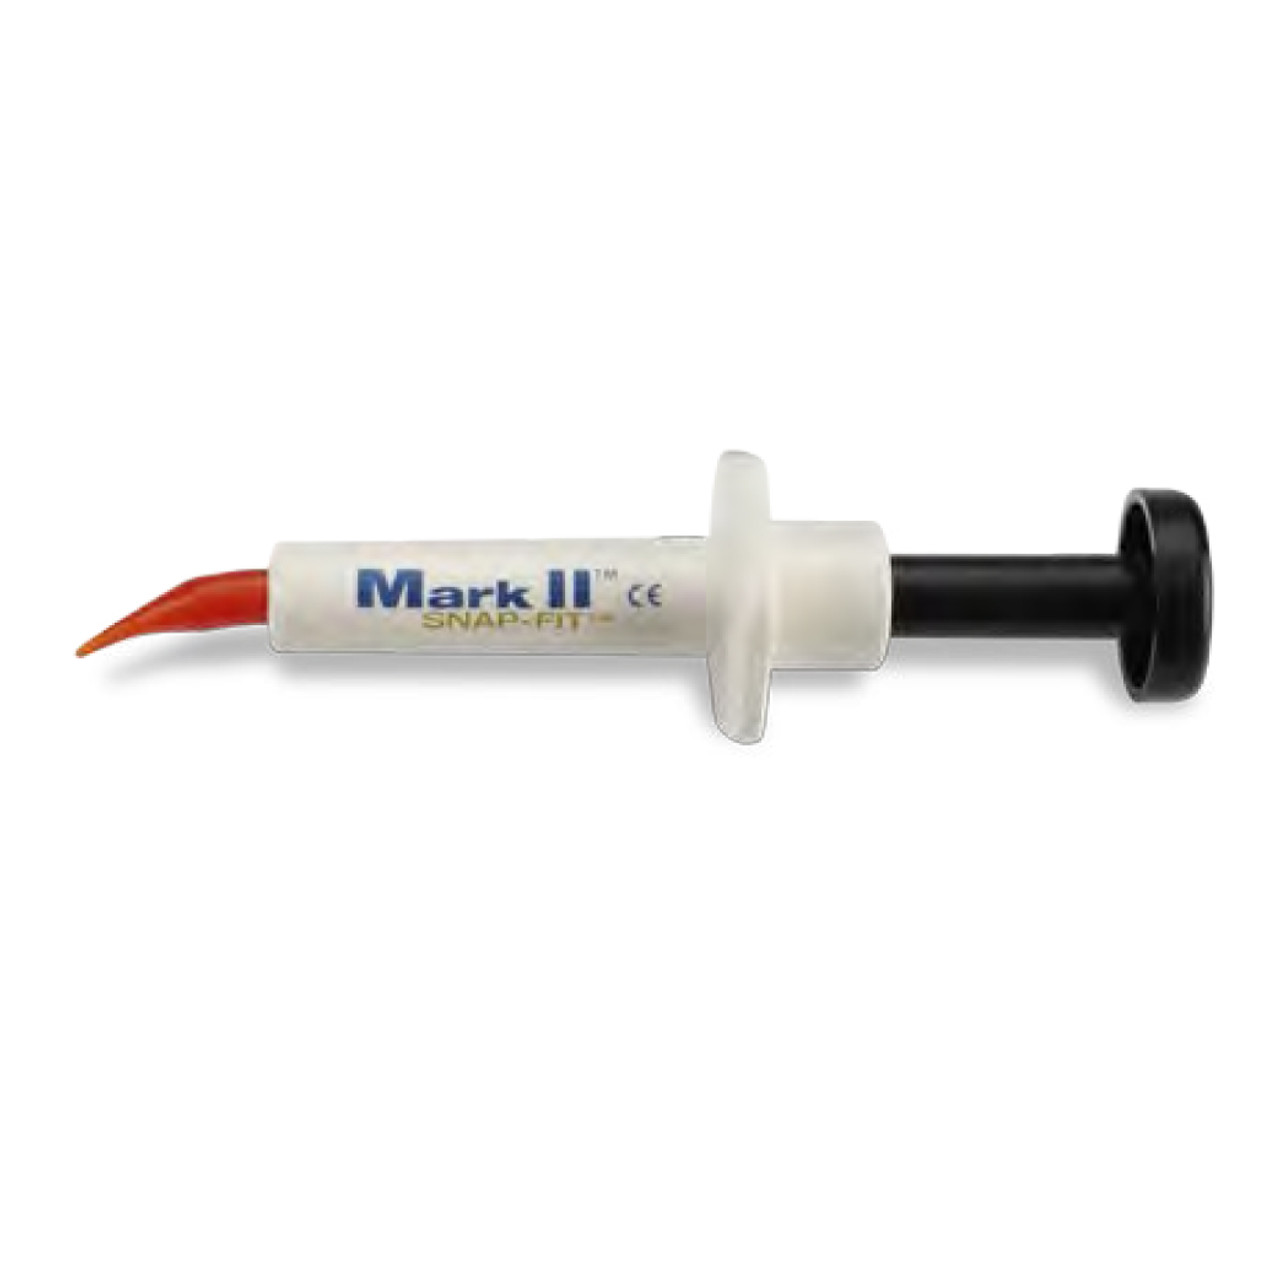 Centrix - Mark II Snap-Fit Syringe